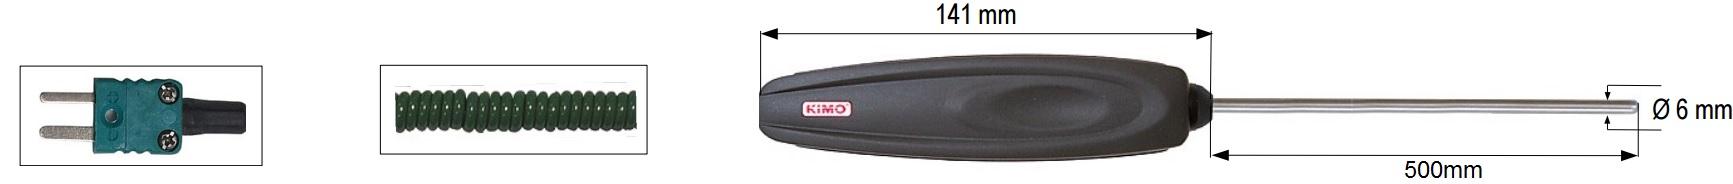 Kimo/Sauermann SIK500 Universal/vätskegivare Typ K, l:500mm